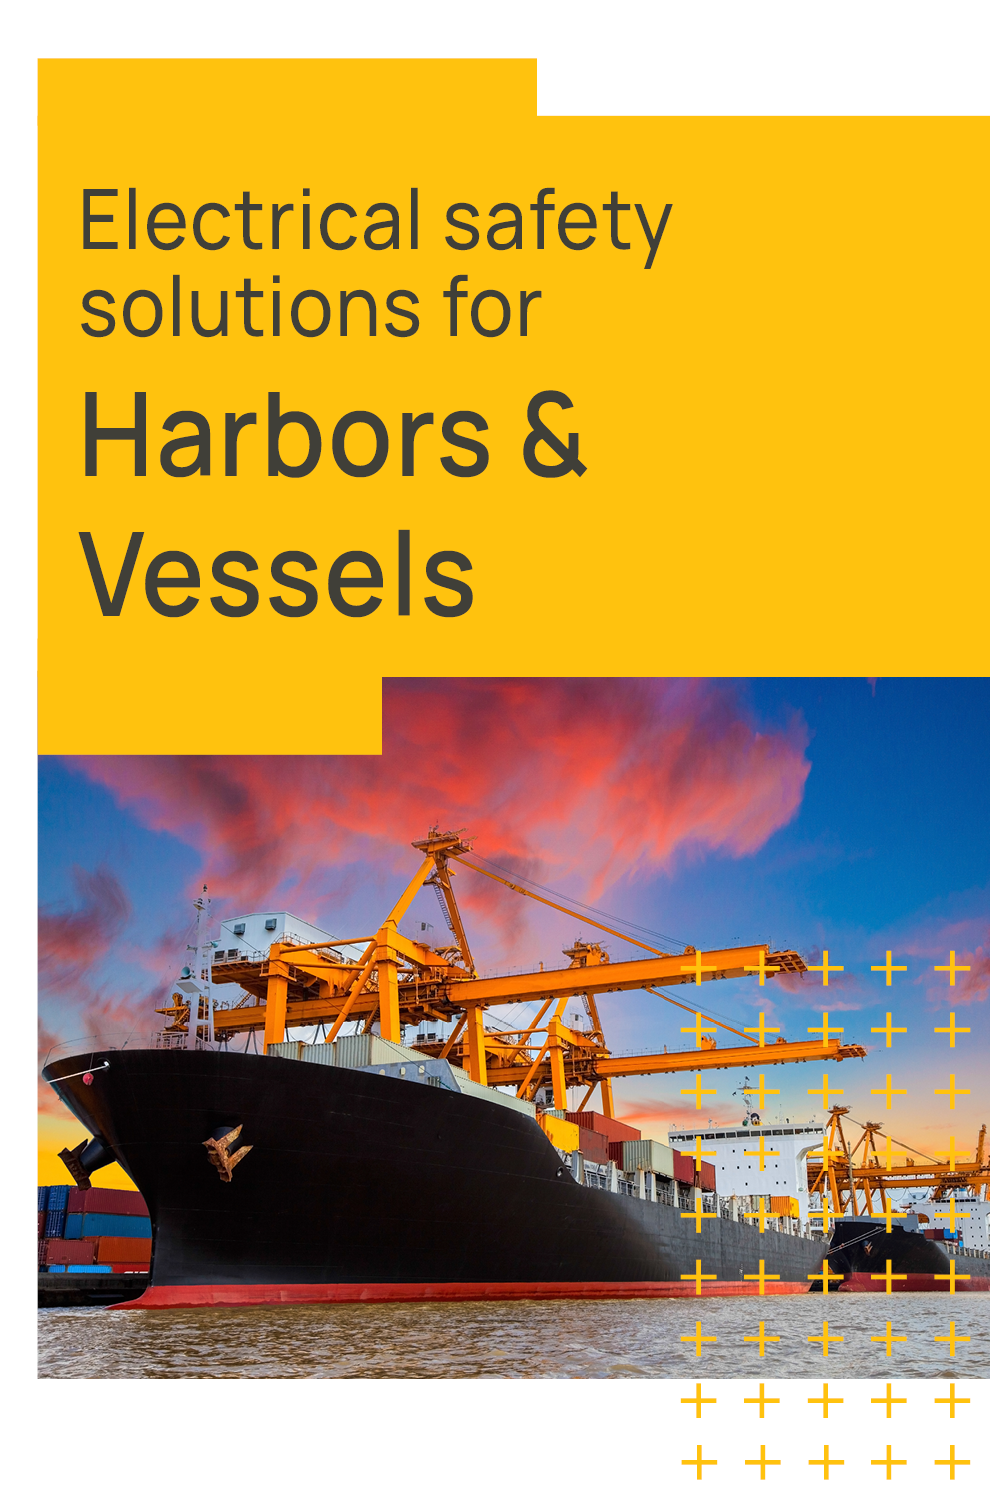 Harbors and Vessels Brochure